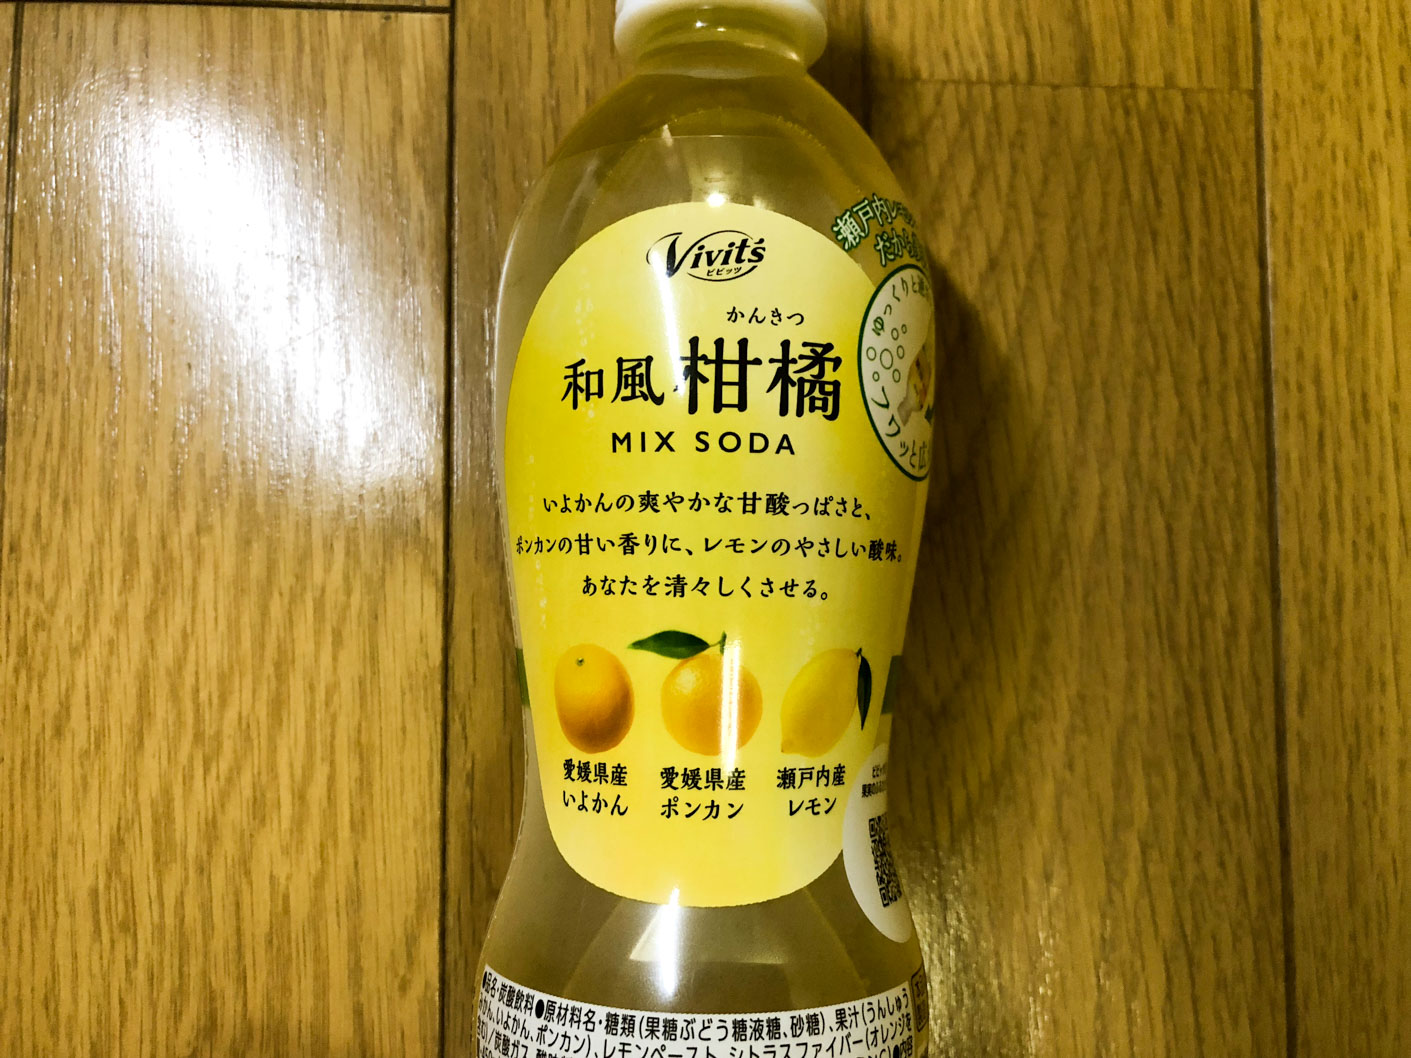 Vivit’s 和風柑橘 MIX SODA